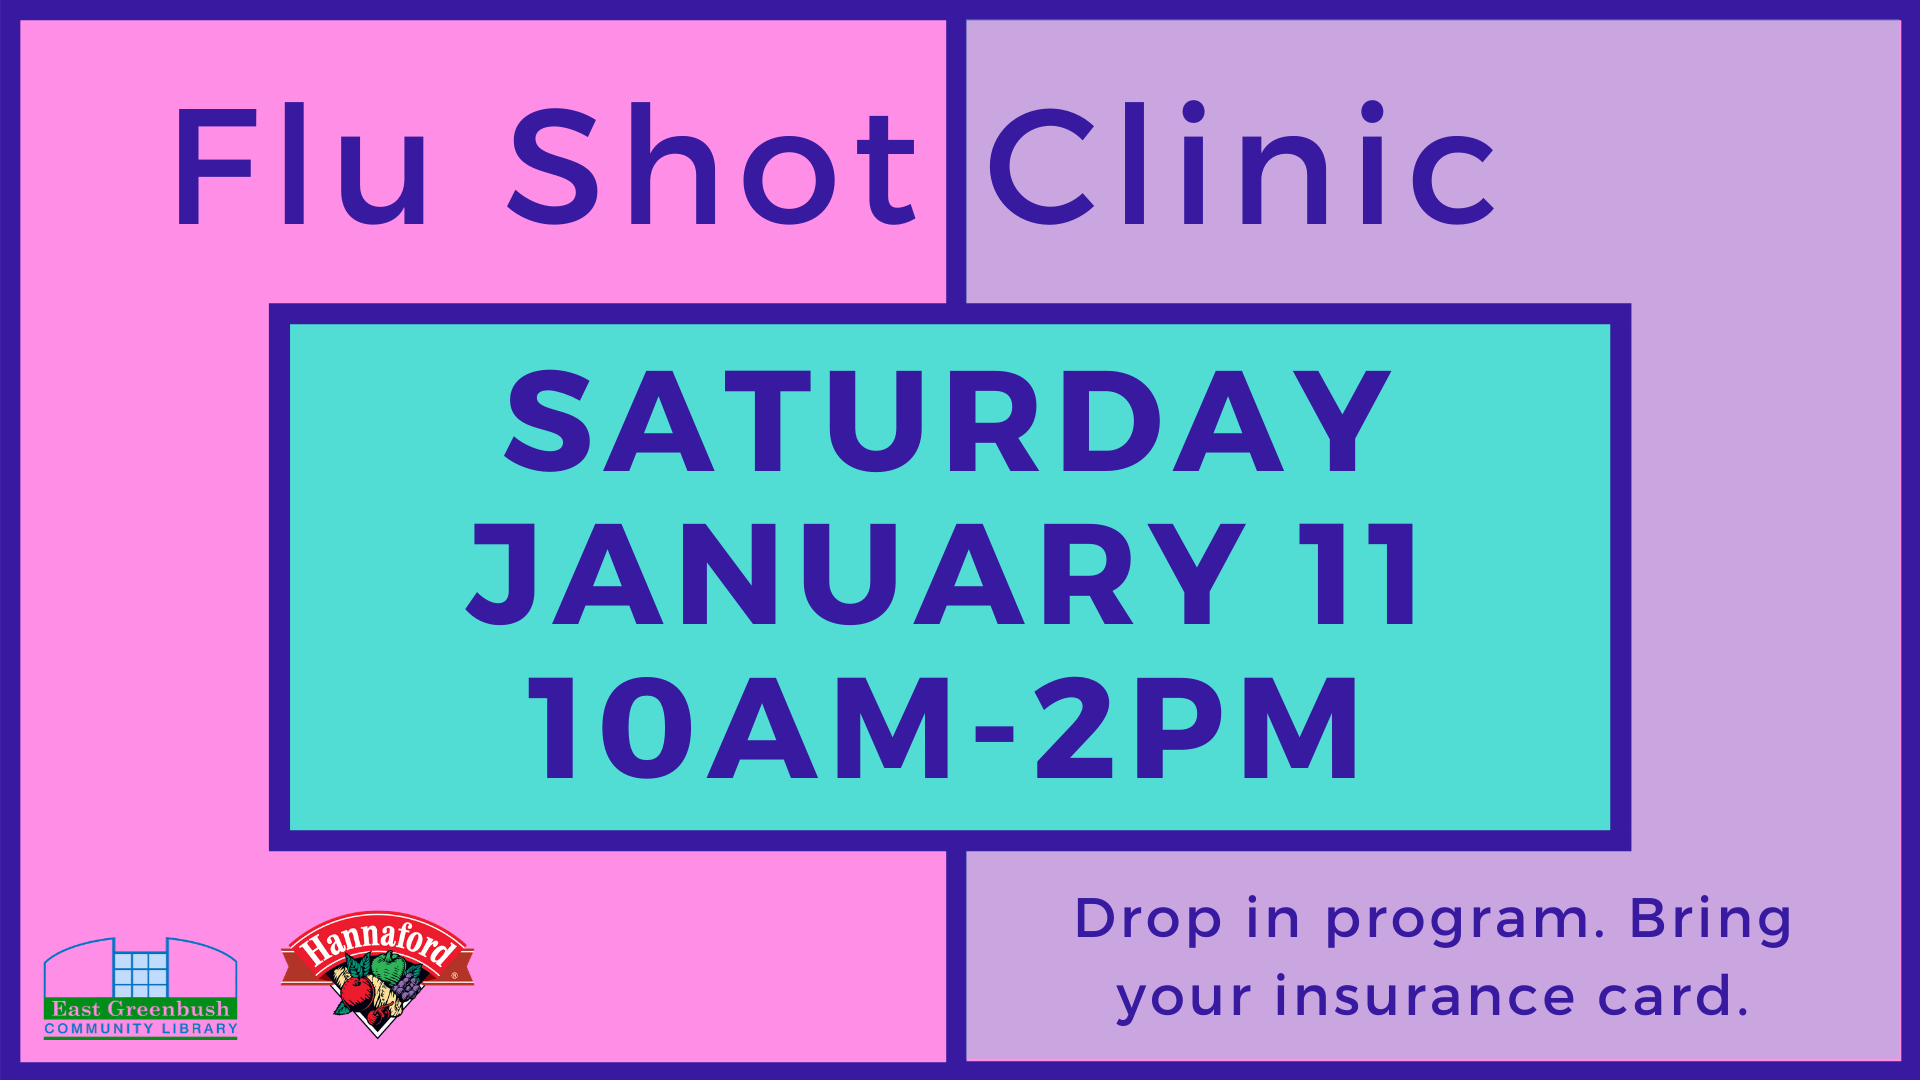 Flu Shot Clinic, January 11, 10am-2pm